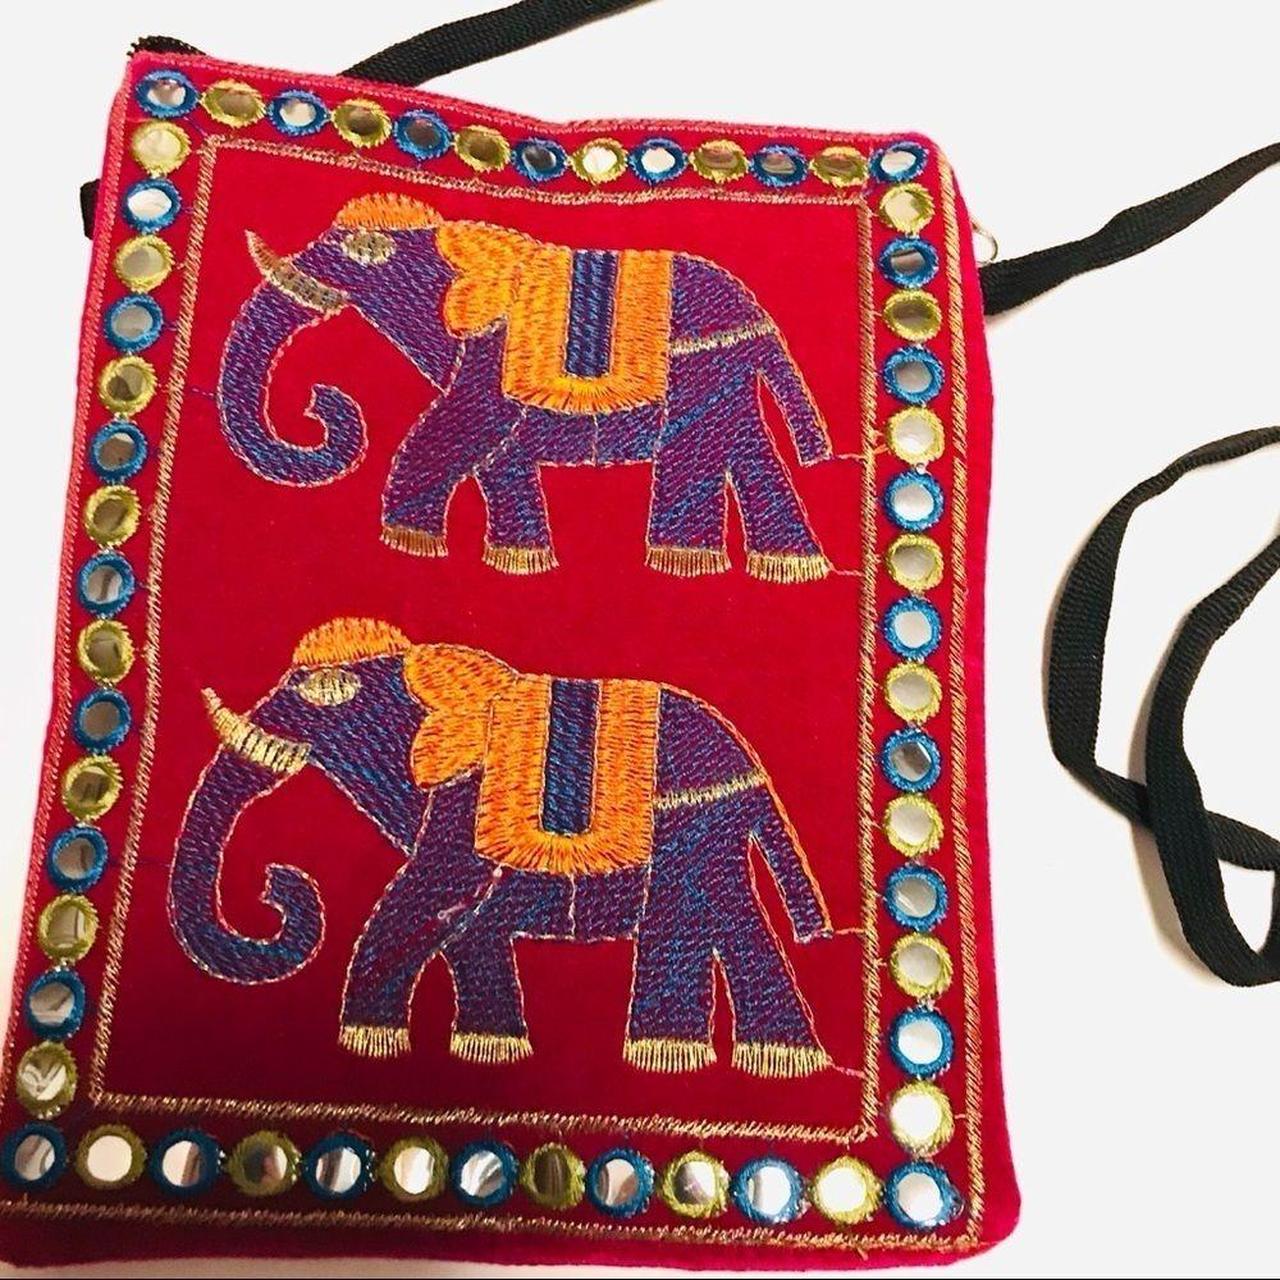 Product Image 1 - Embroidery Boho Elephant Shoulder Bag

Bag